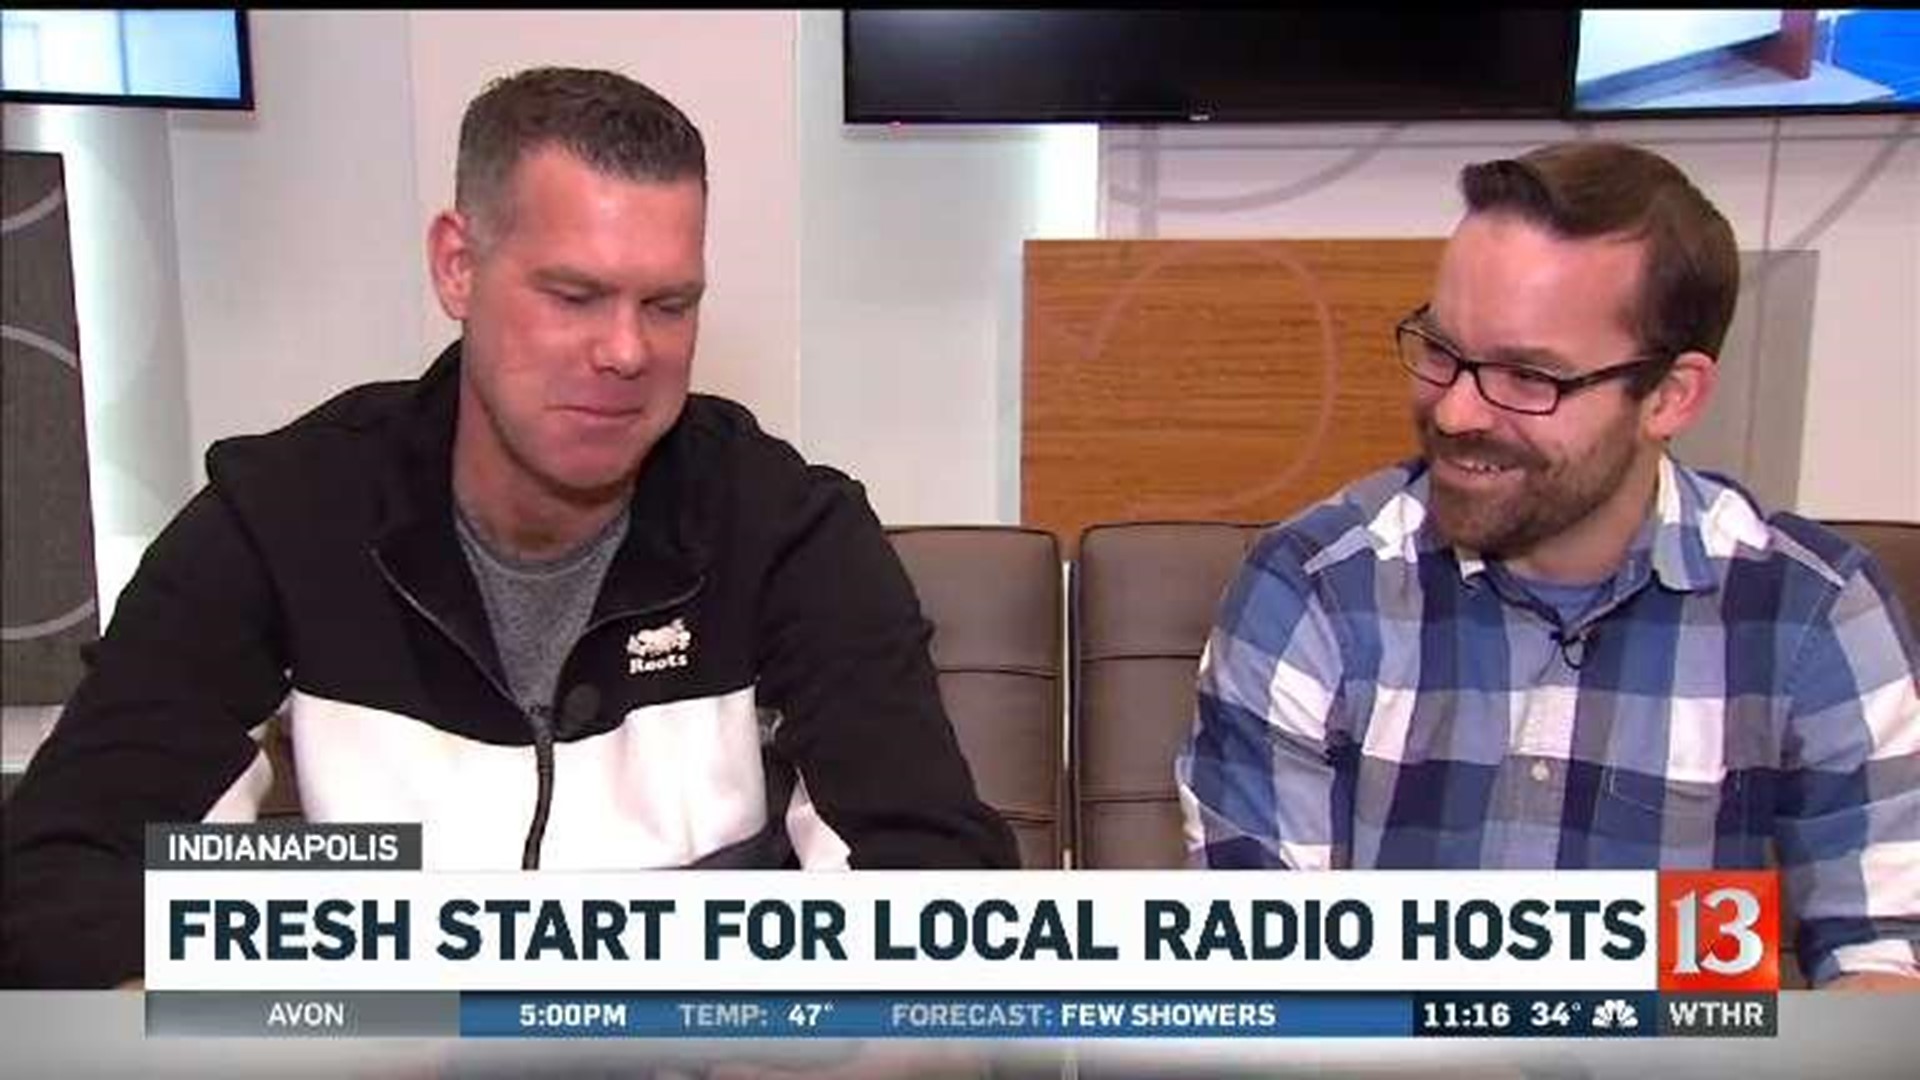 Local radio hosts seek fresh start